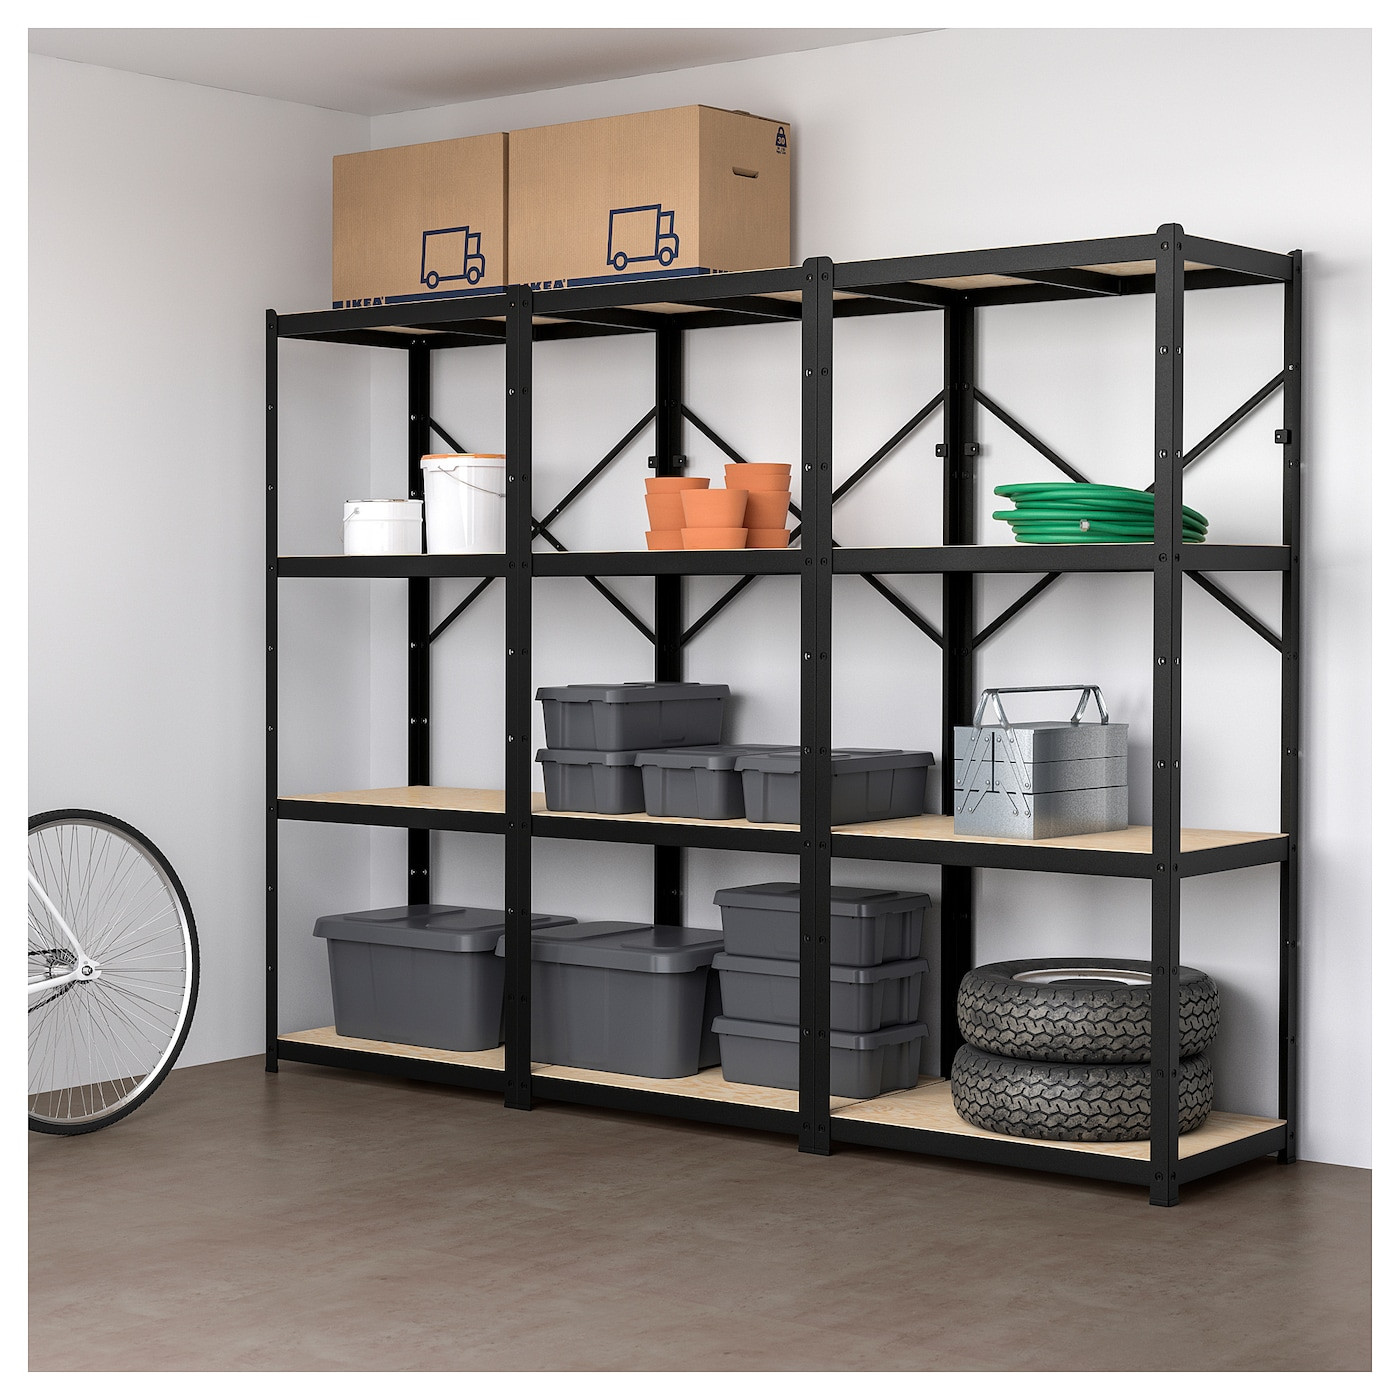 Garage Organization Ikea
 BROR Shelving unit black wood IKEA